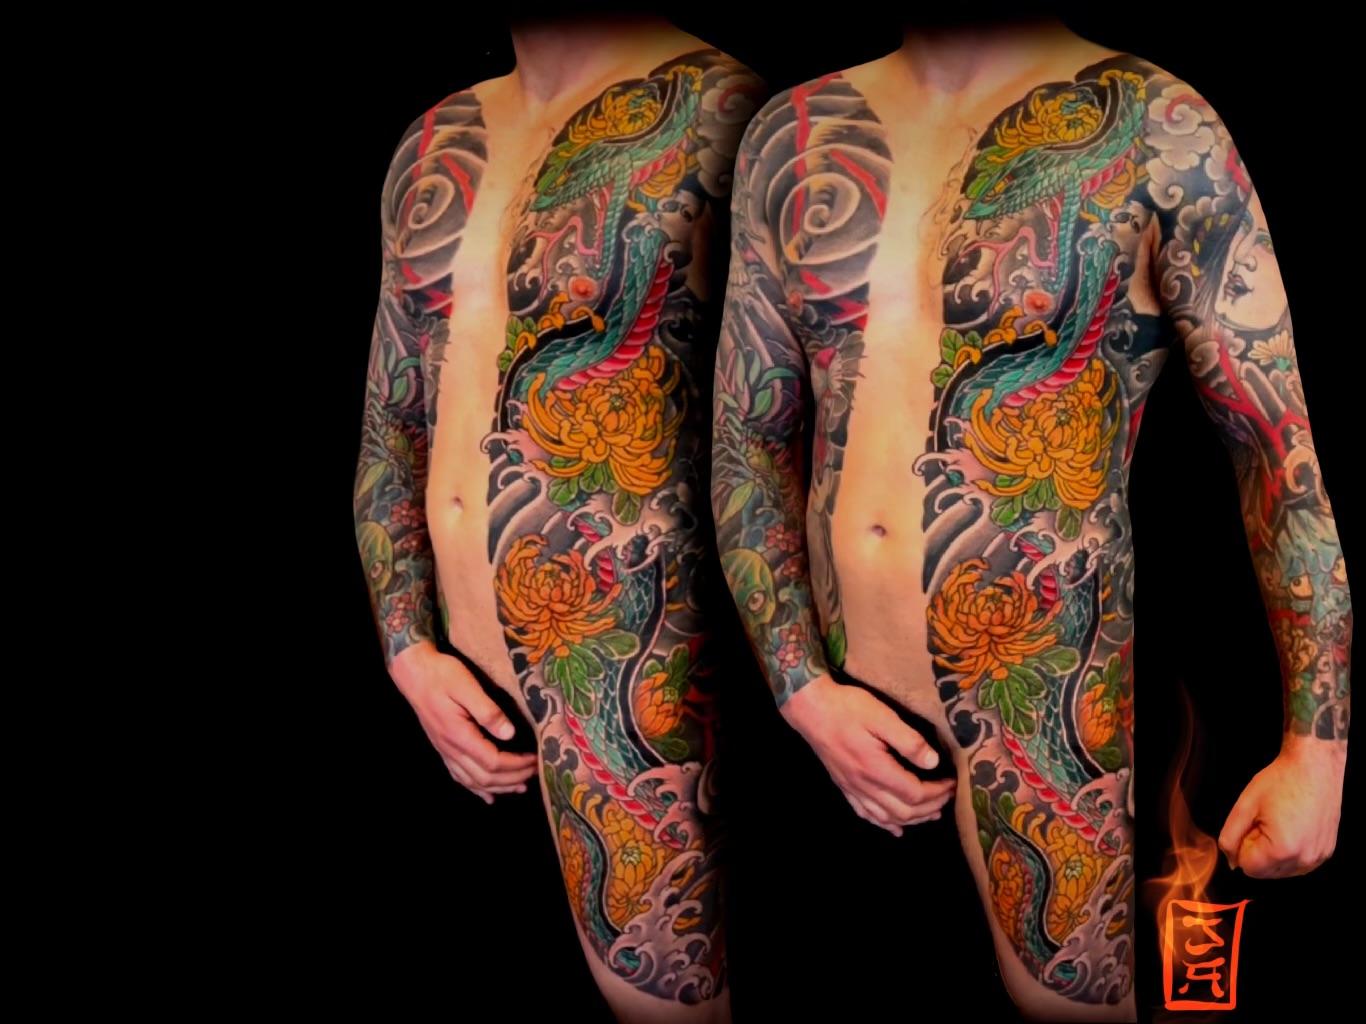 Ten Thousand Waves Tattoo Gallery